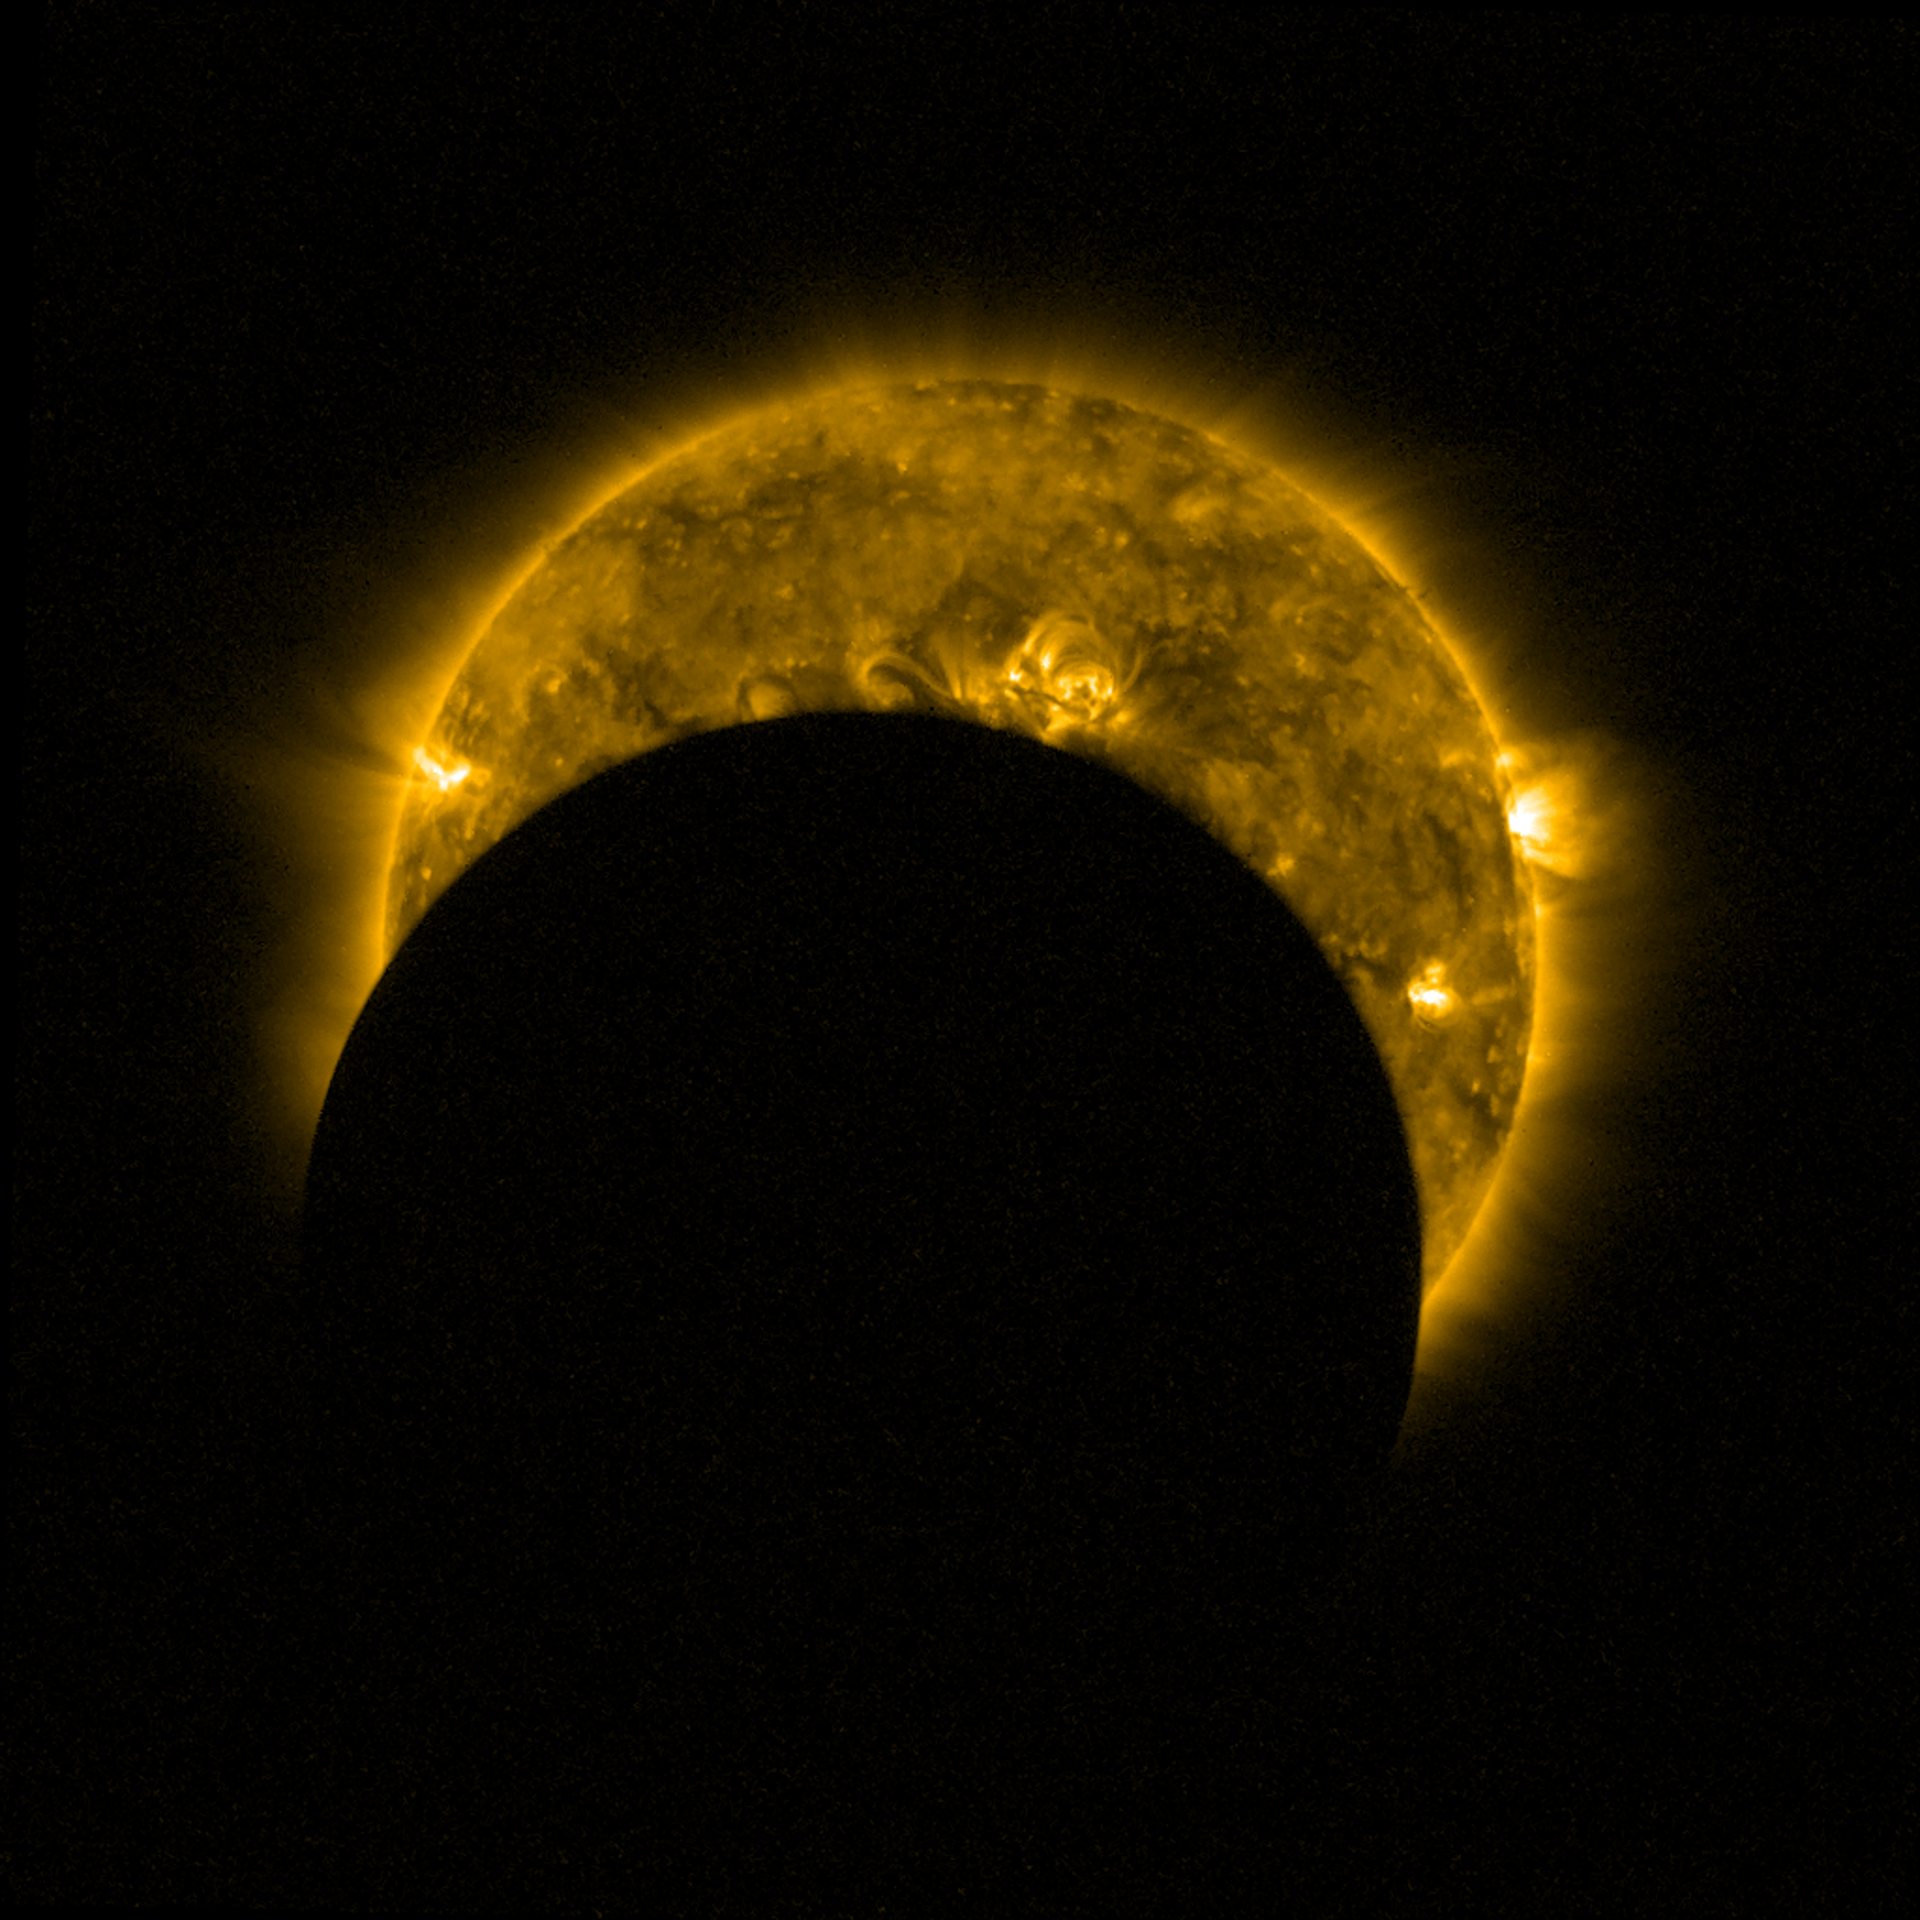 Proba-2 partial eclipse, 26 February 2017